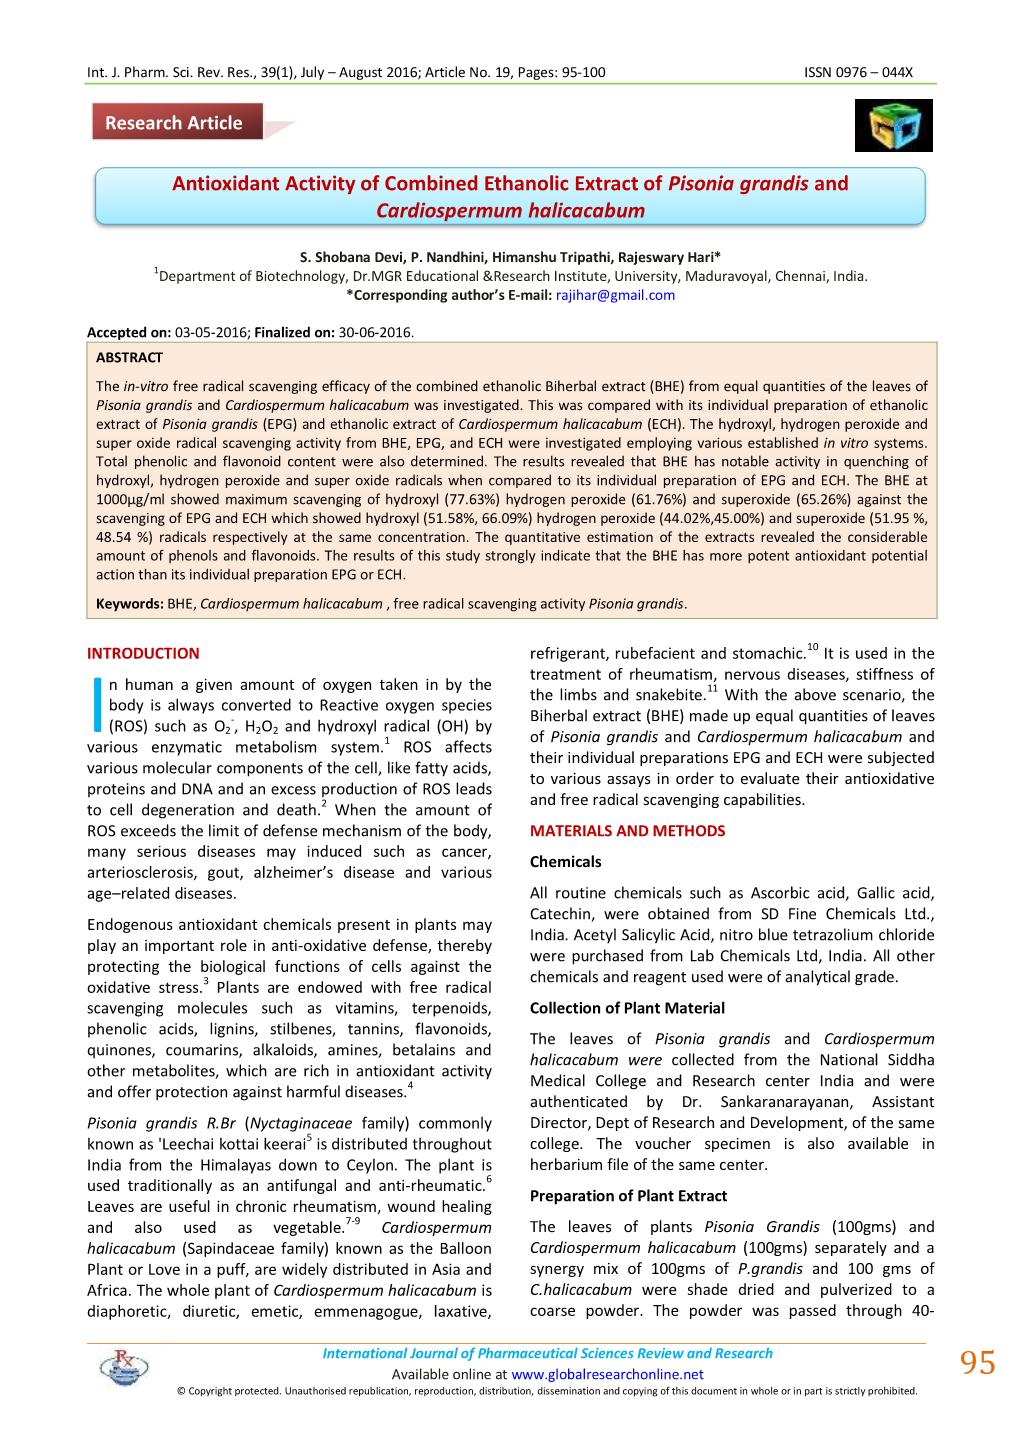 Antioxidant Activity of Combined Ethanolic Extract of Pisonia Grandis and Cardiospermum Halicacabum